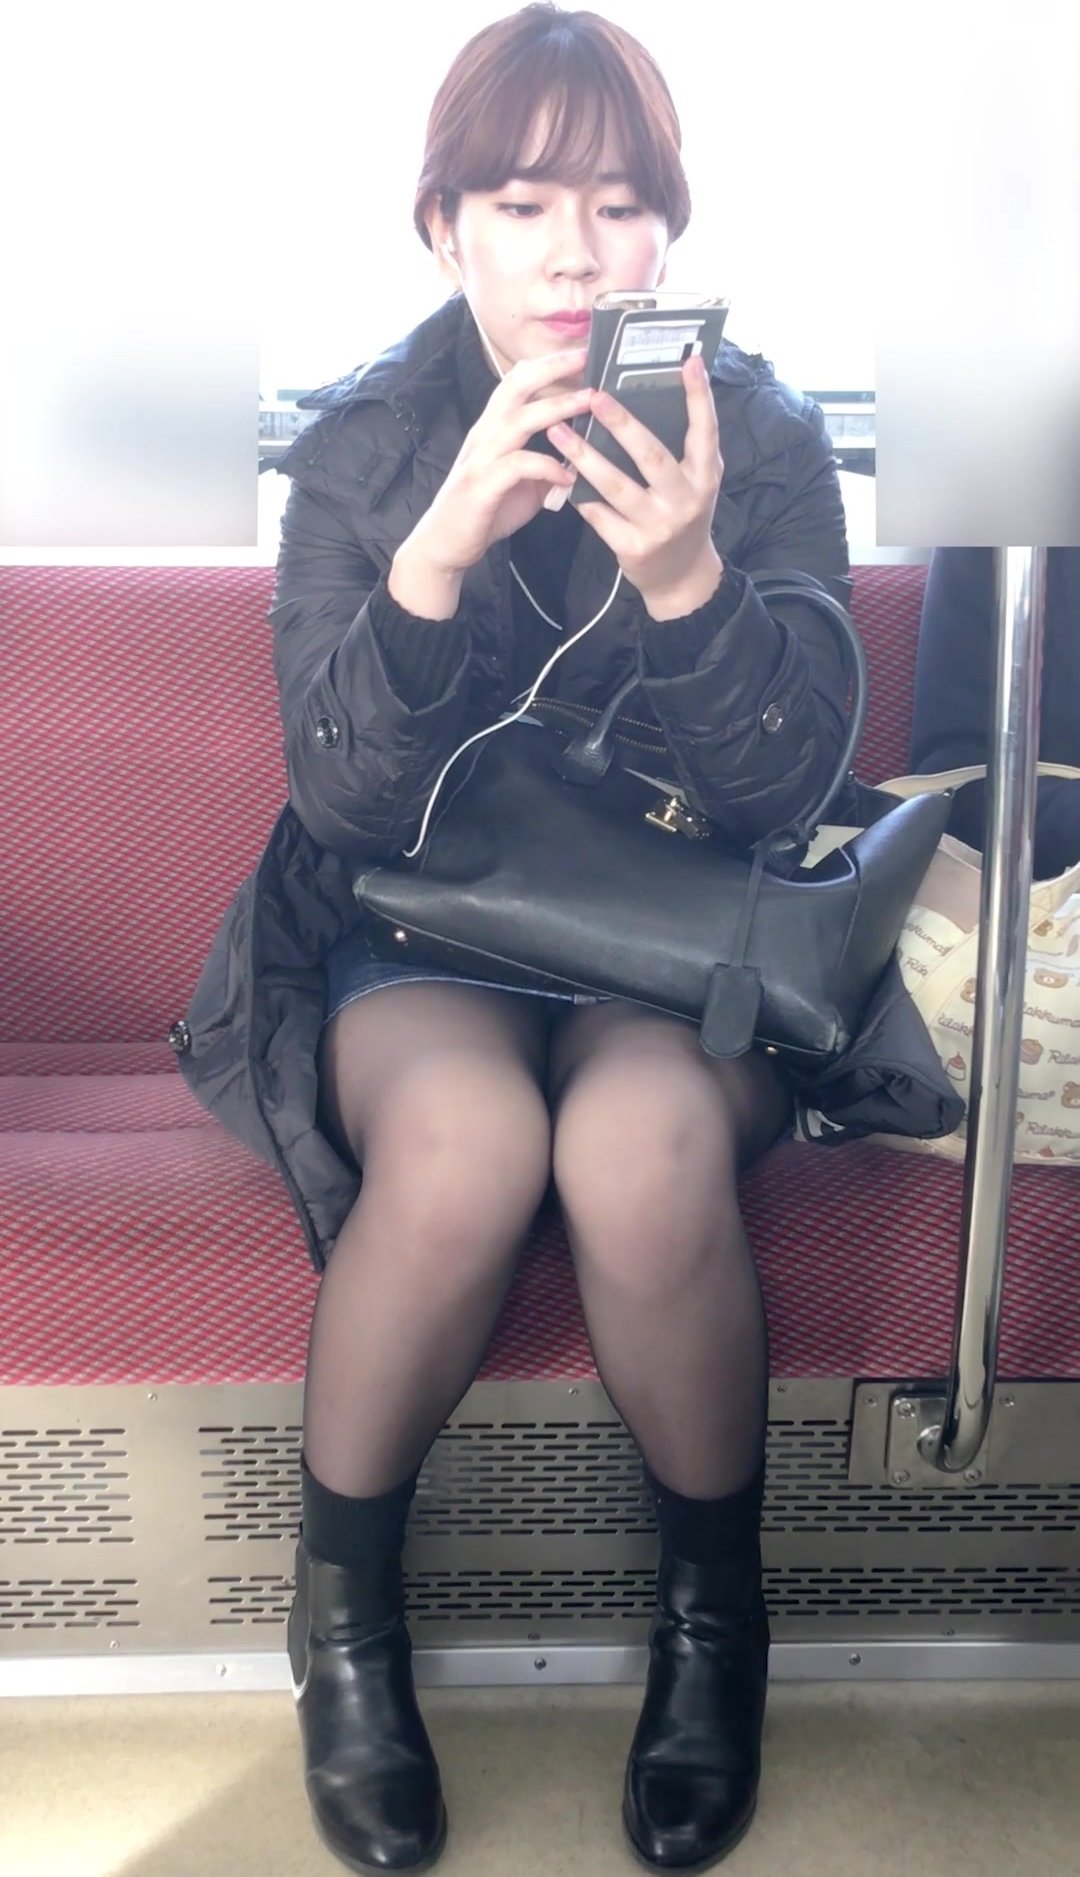 Japanese Lady Pantyhose Upskirt - video 160 - ThisVid.com